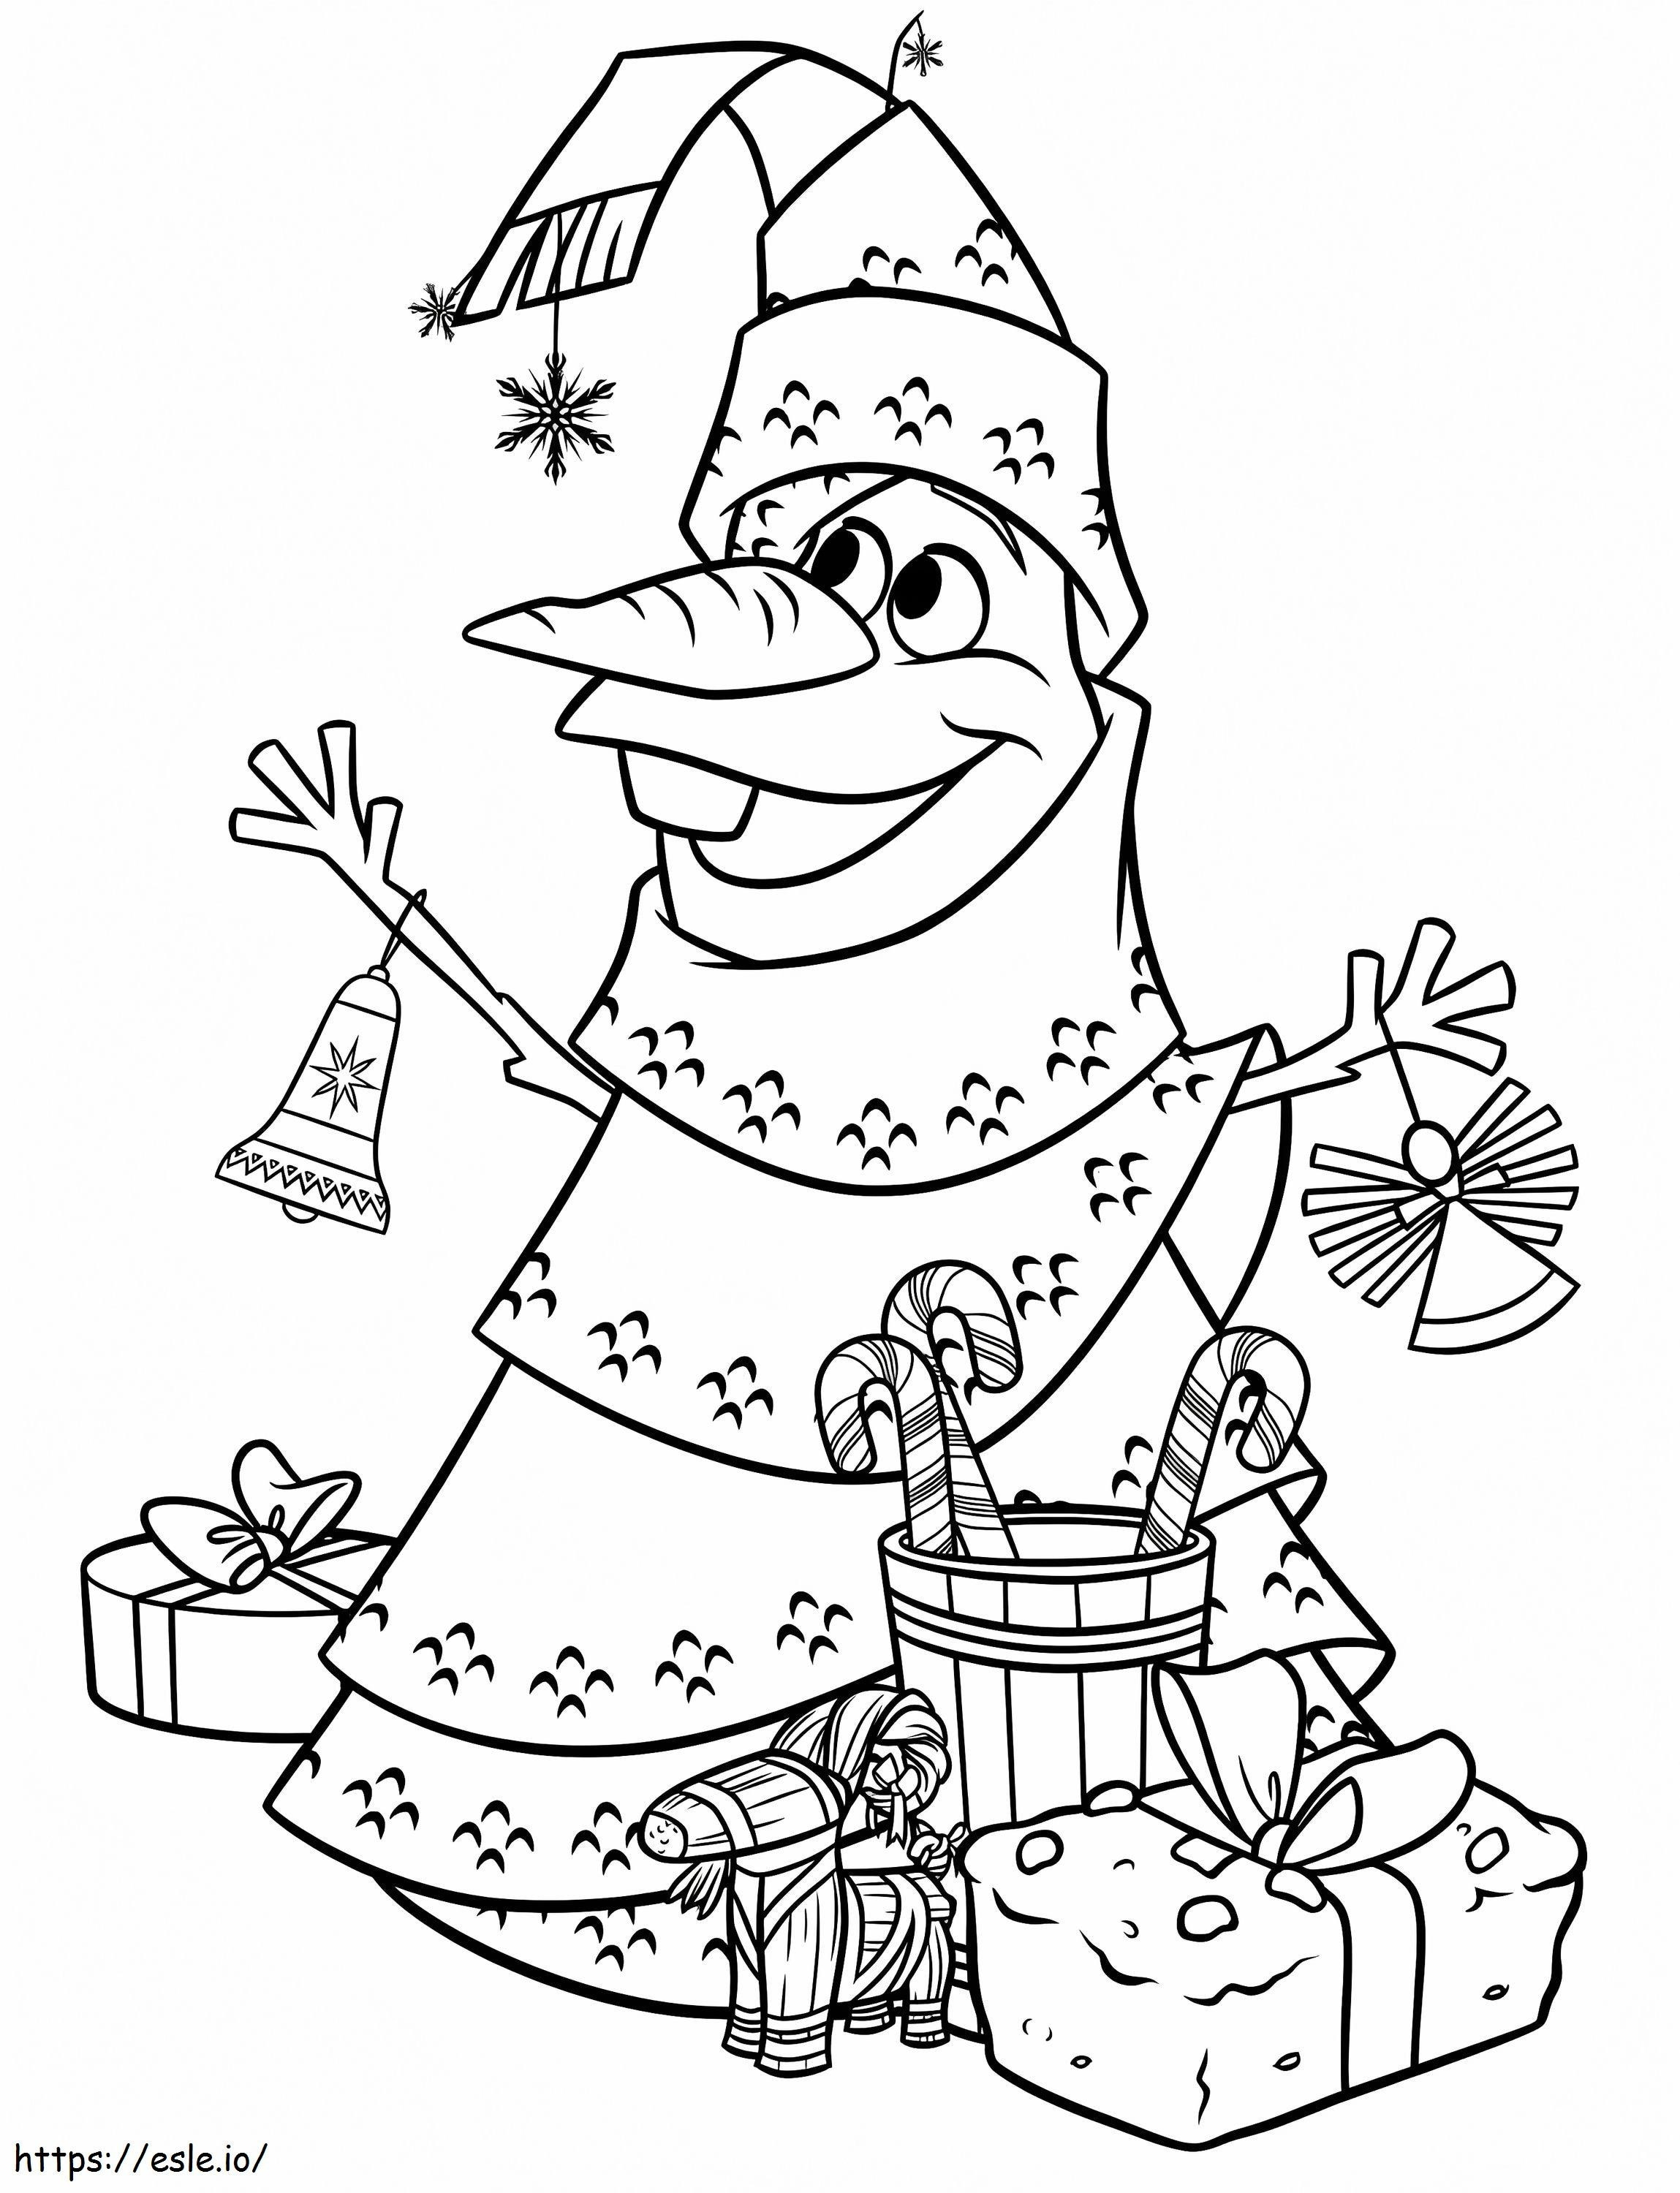 Olaf Christmas Tree coloring page